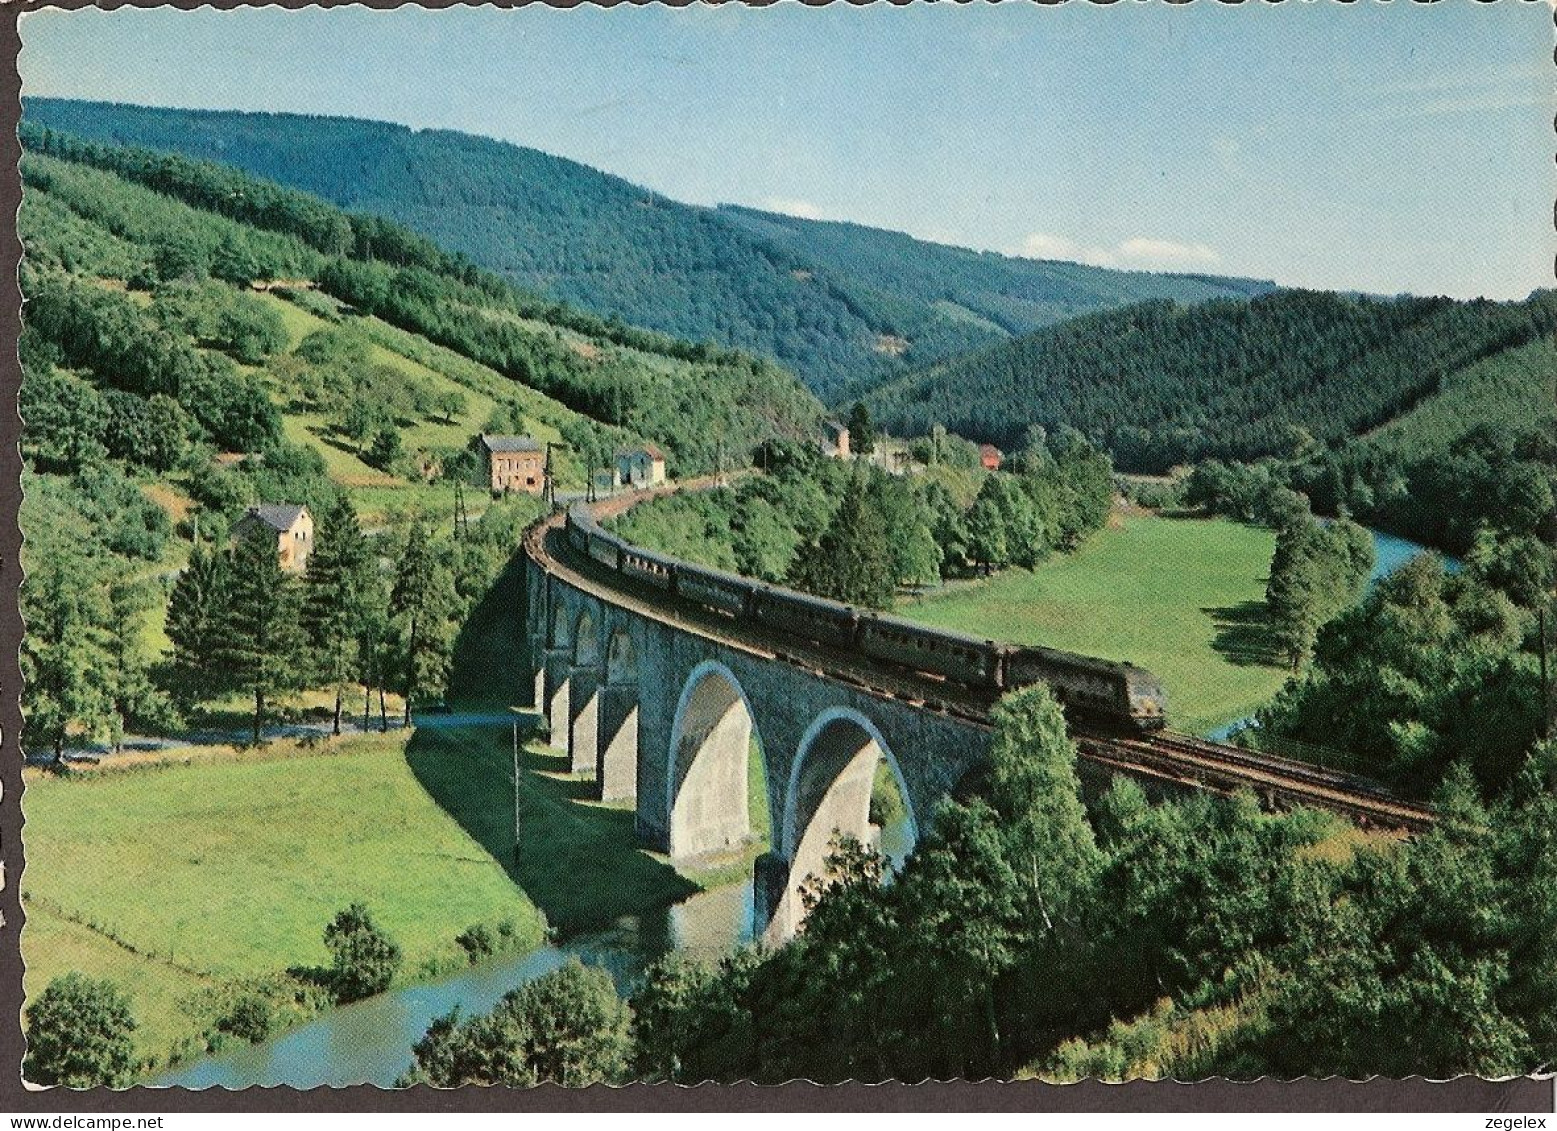 Amblève - Amel - Train Sur Le Pont. Chemins De Fer - Eisenbahn Mit Zug über Das Tal Der Amel. Ferroviaire - Amel